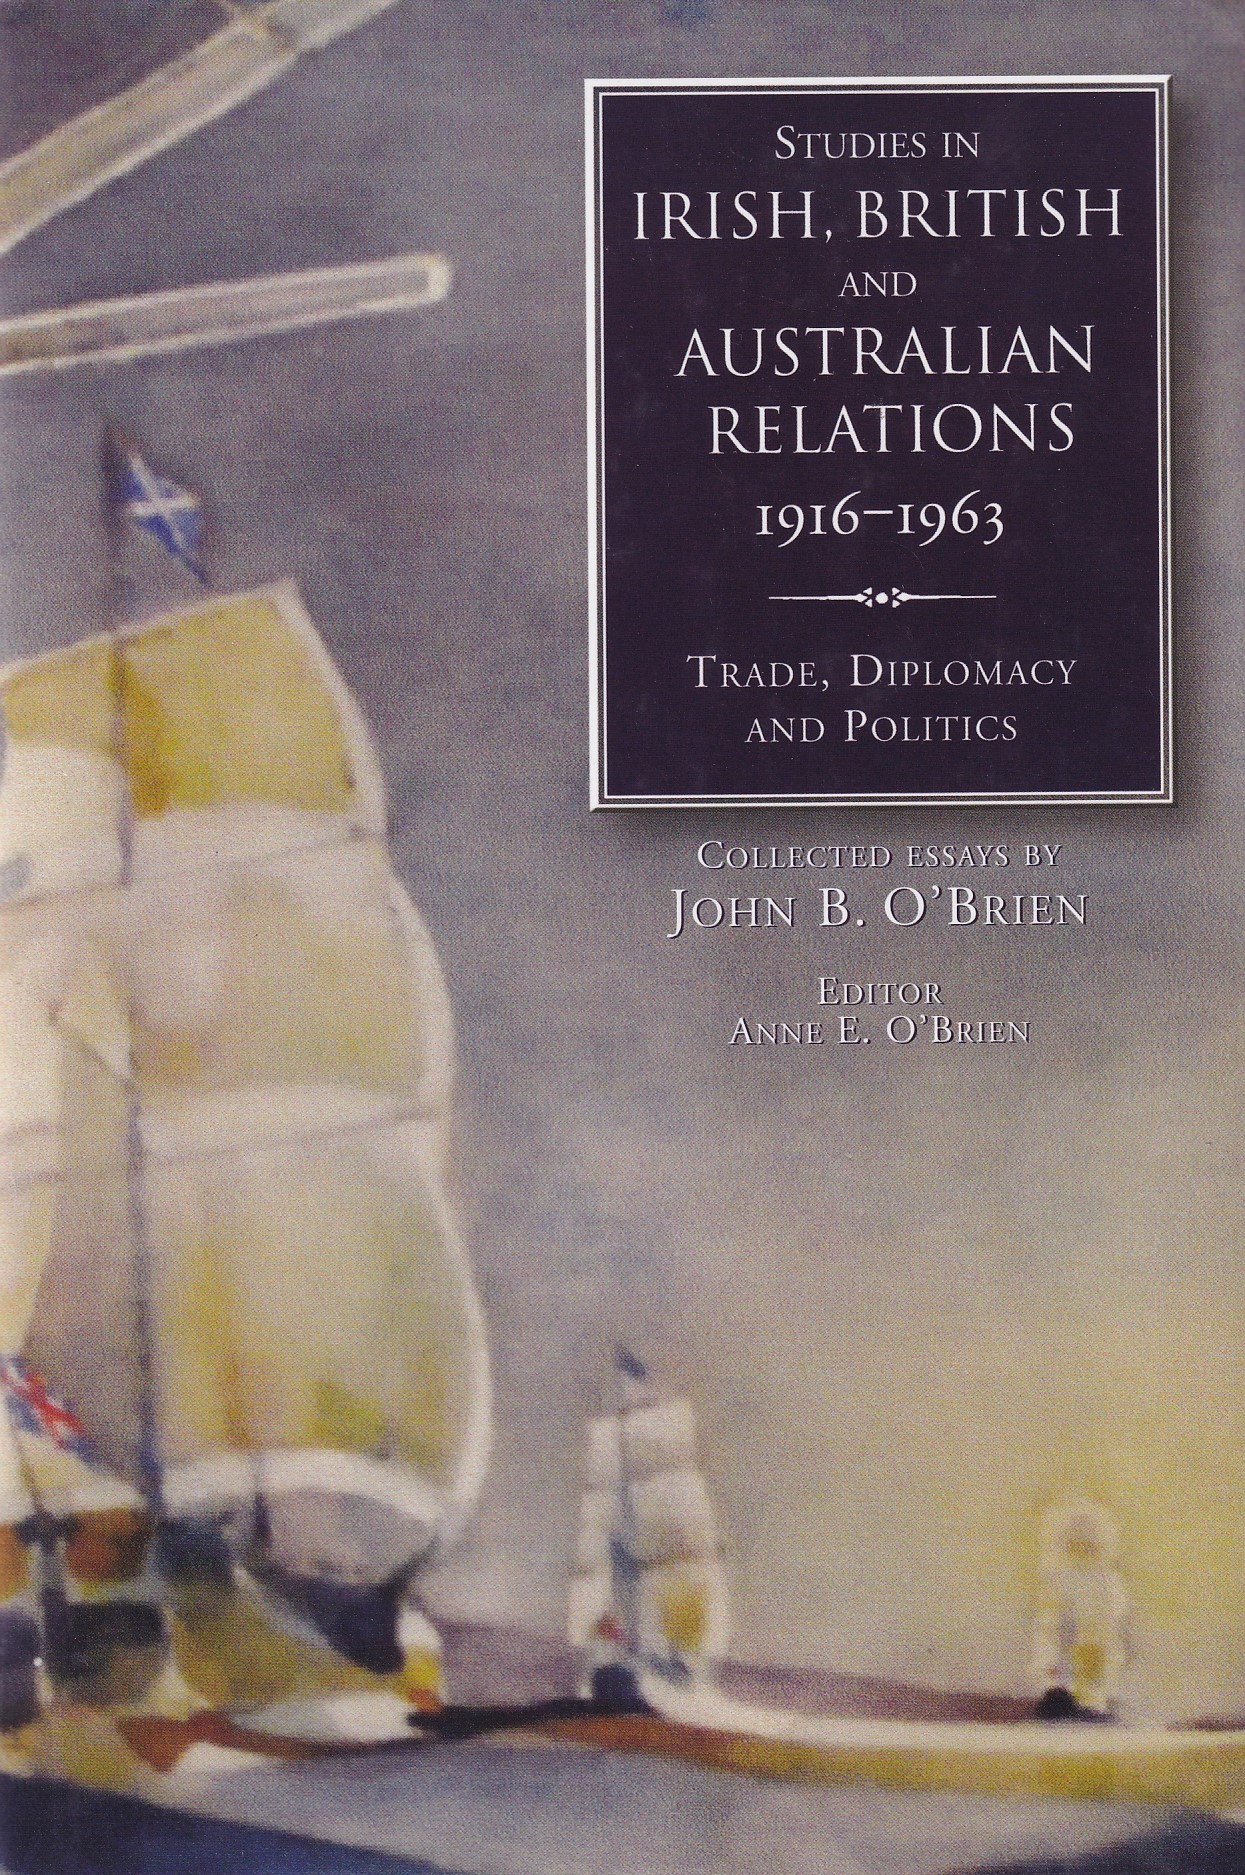 Studies in Irish, British and Australian Relations, 1916-1963: Trade, Diplomacy, and Politics by O'Brien, John B.